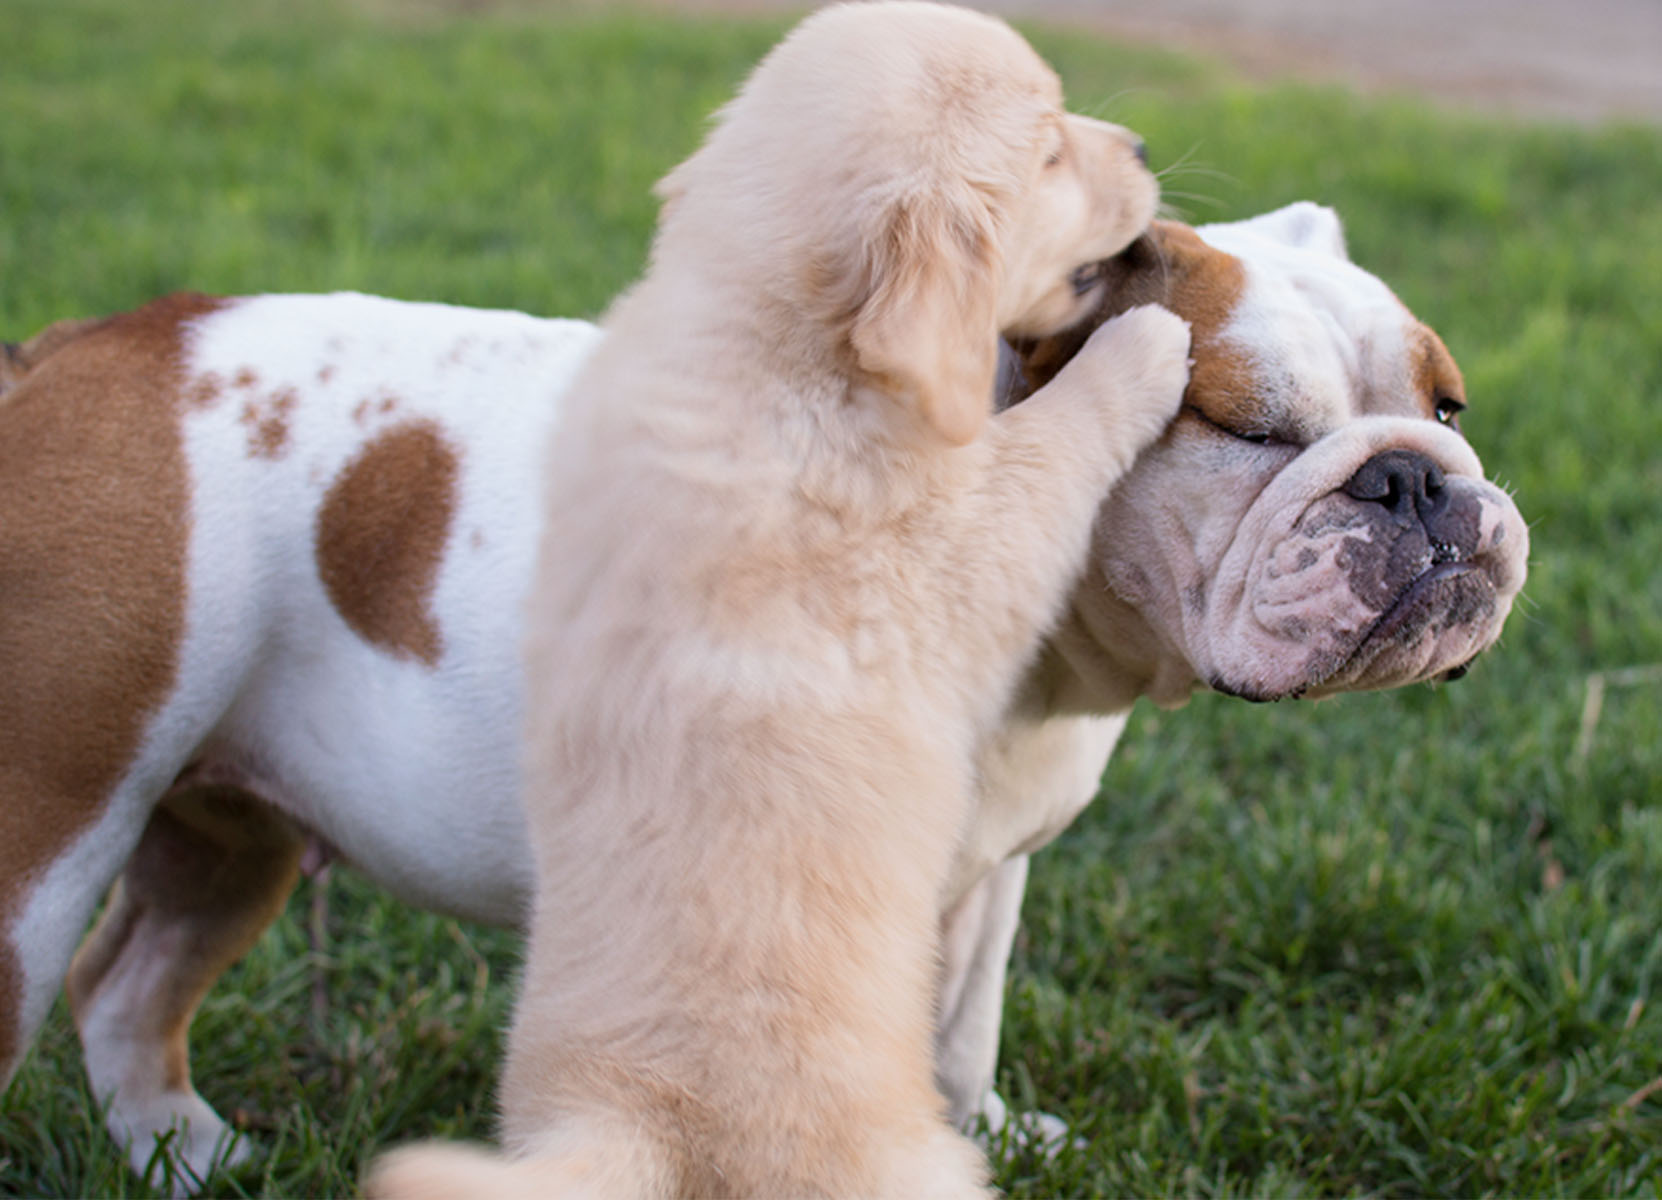 A Golden Retriever puppy playfully biting the ear of an English Bulldog